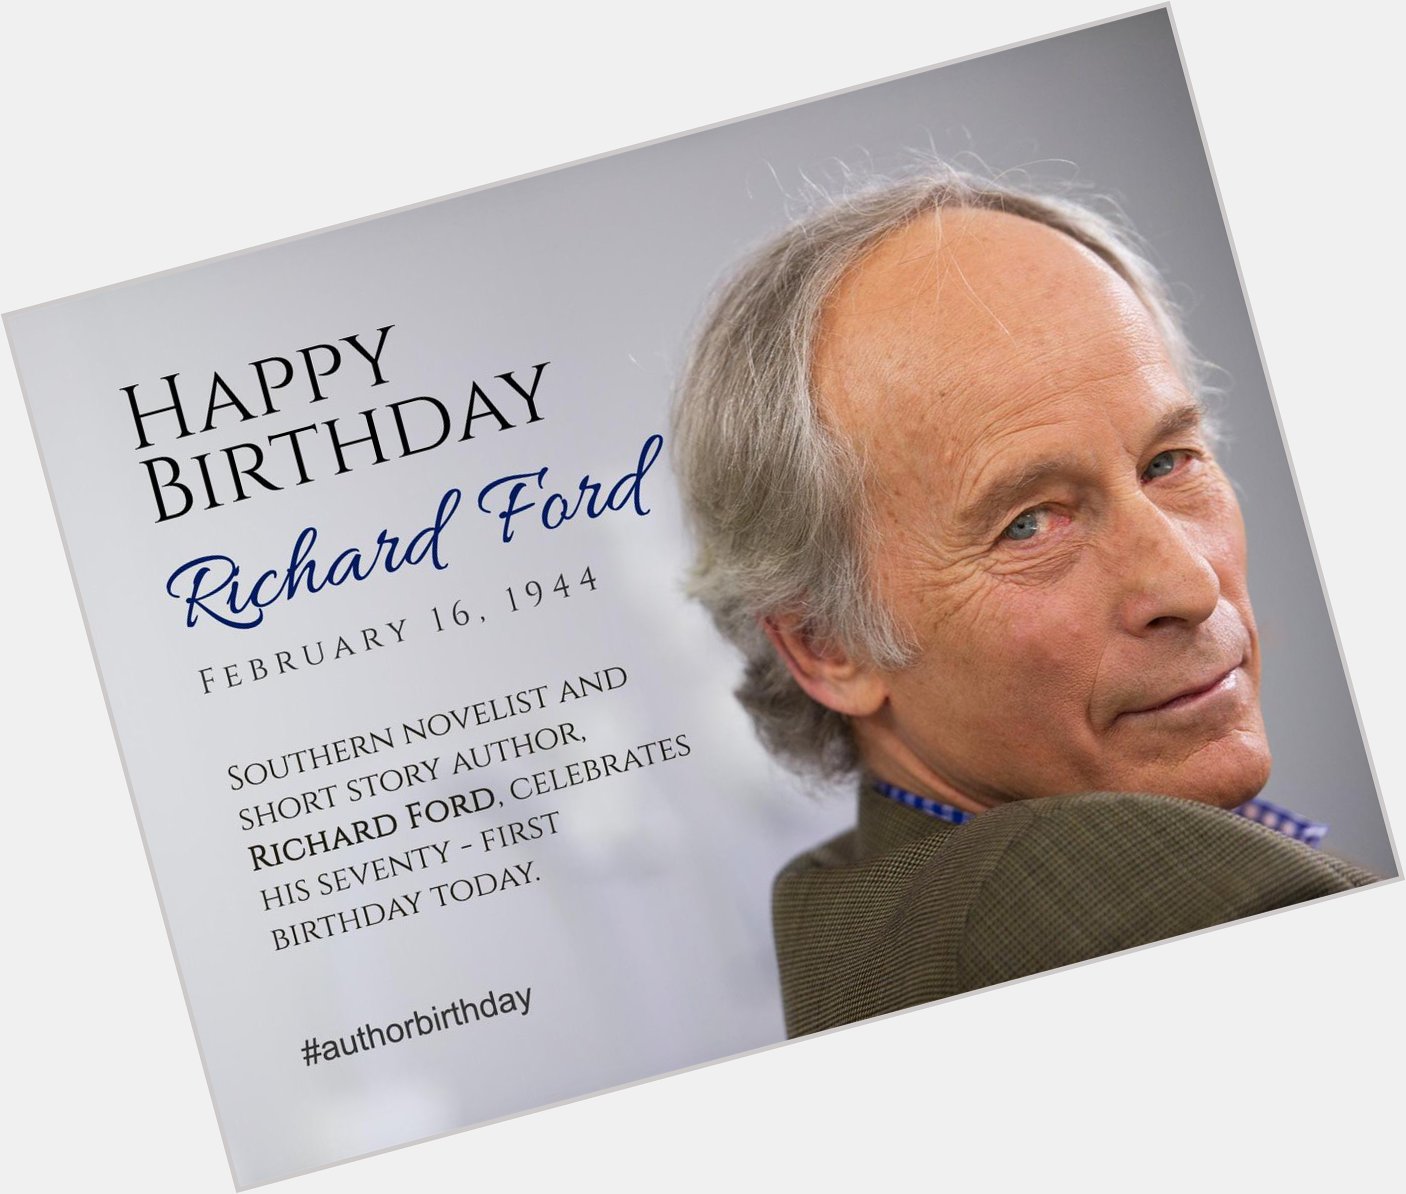 Southern novelist Richard Ford celebrates his seventy-first birthday today! Happy Birthday! 